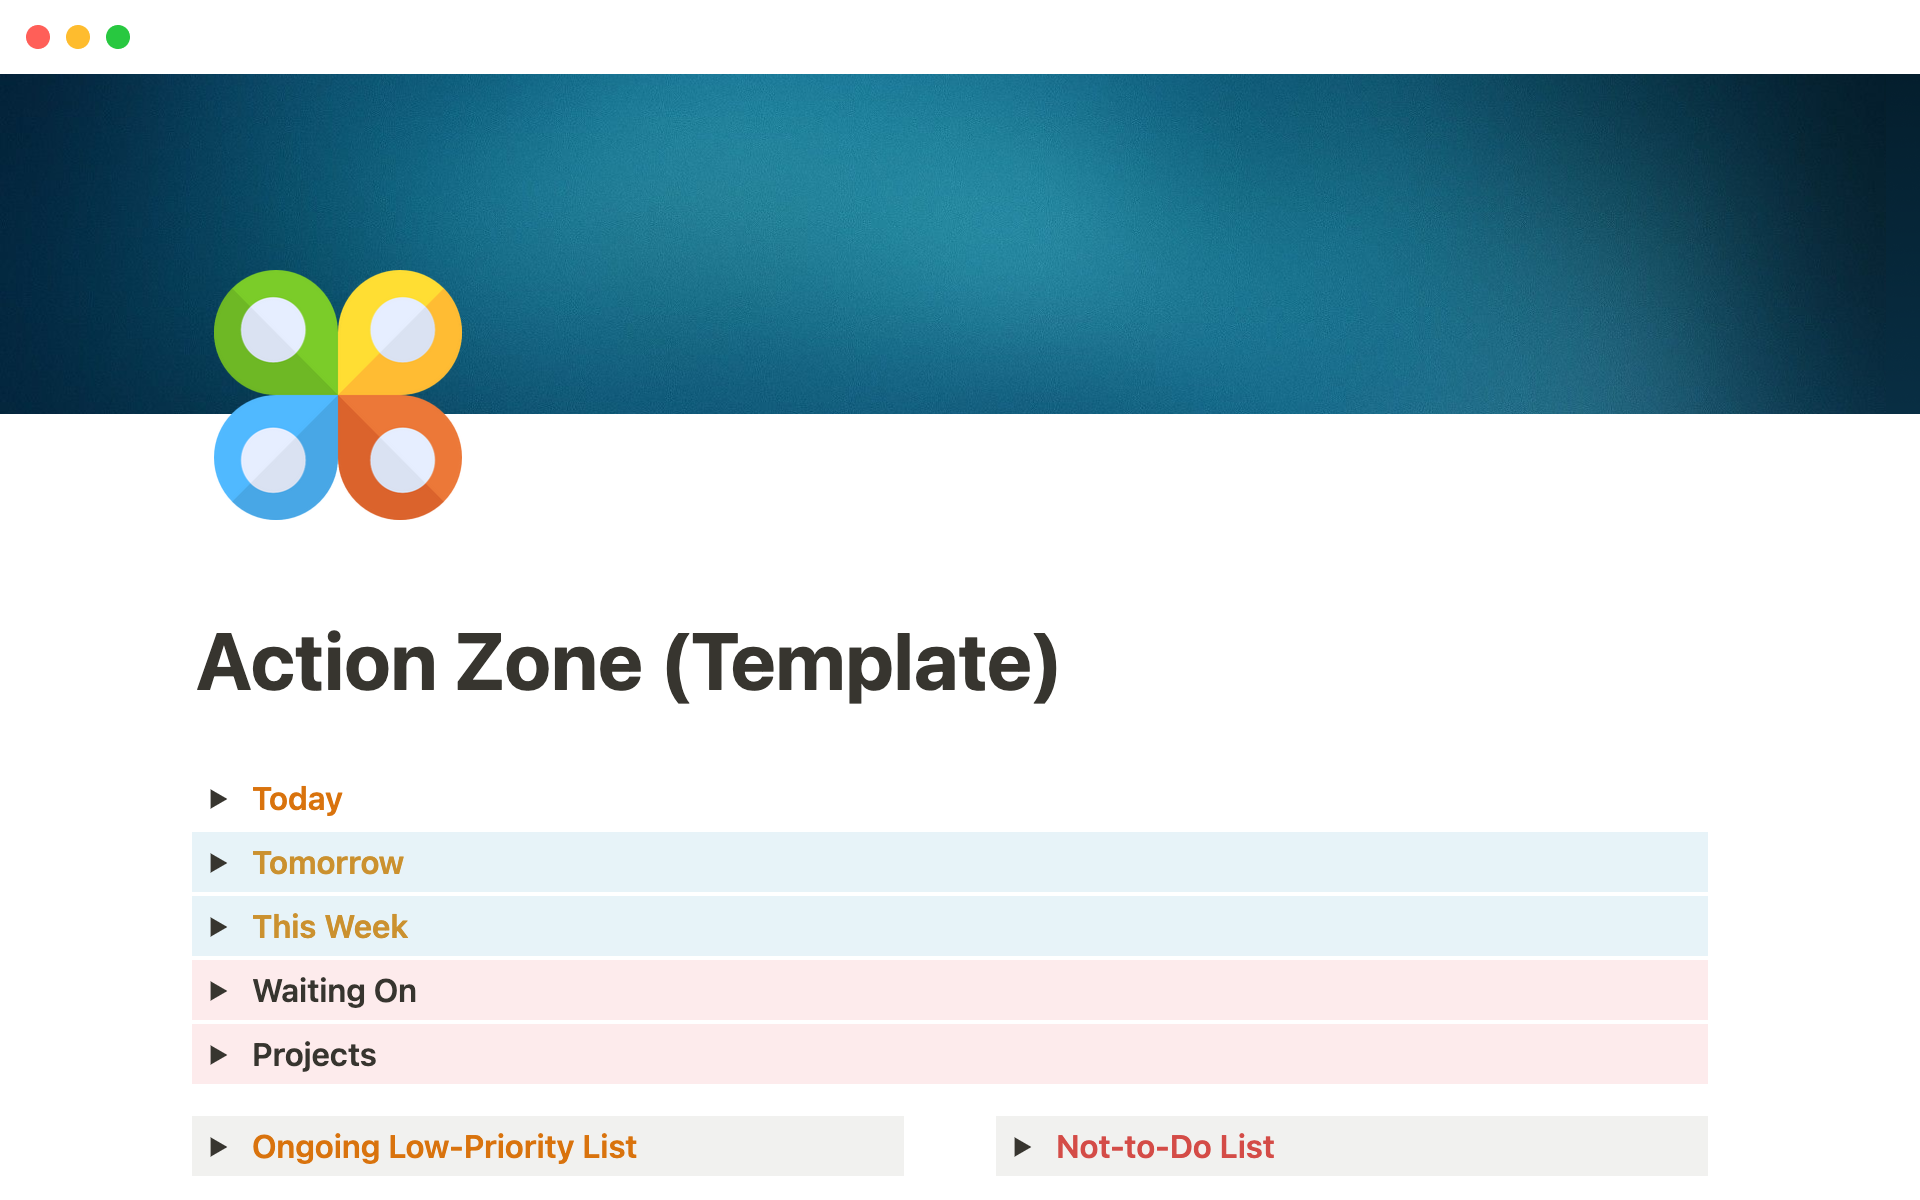 Vista previa de plantilla para Action Zone Task/Project Manager